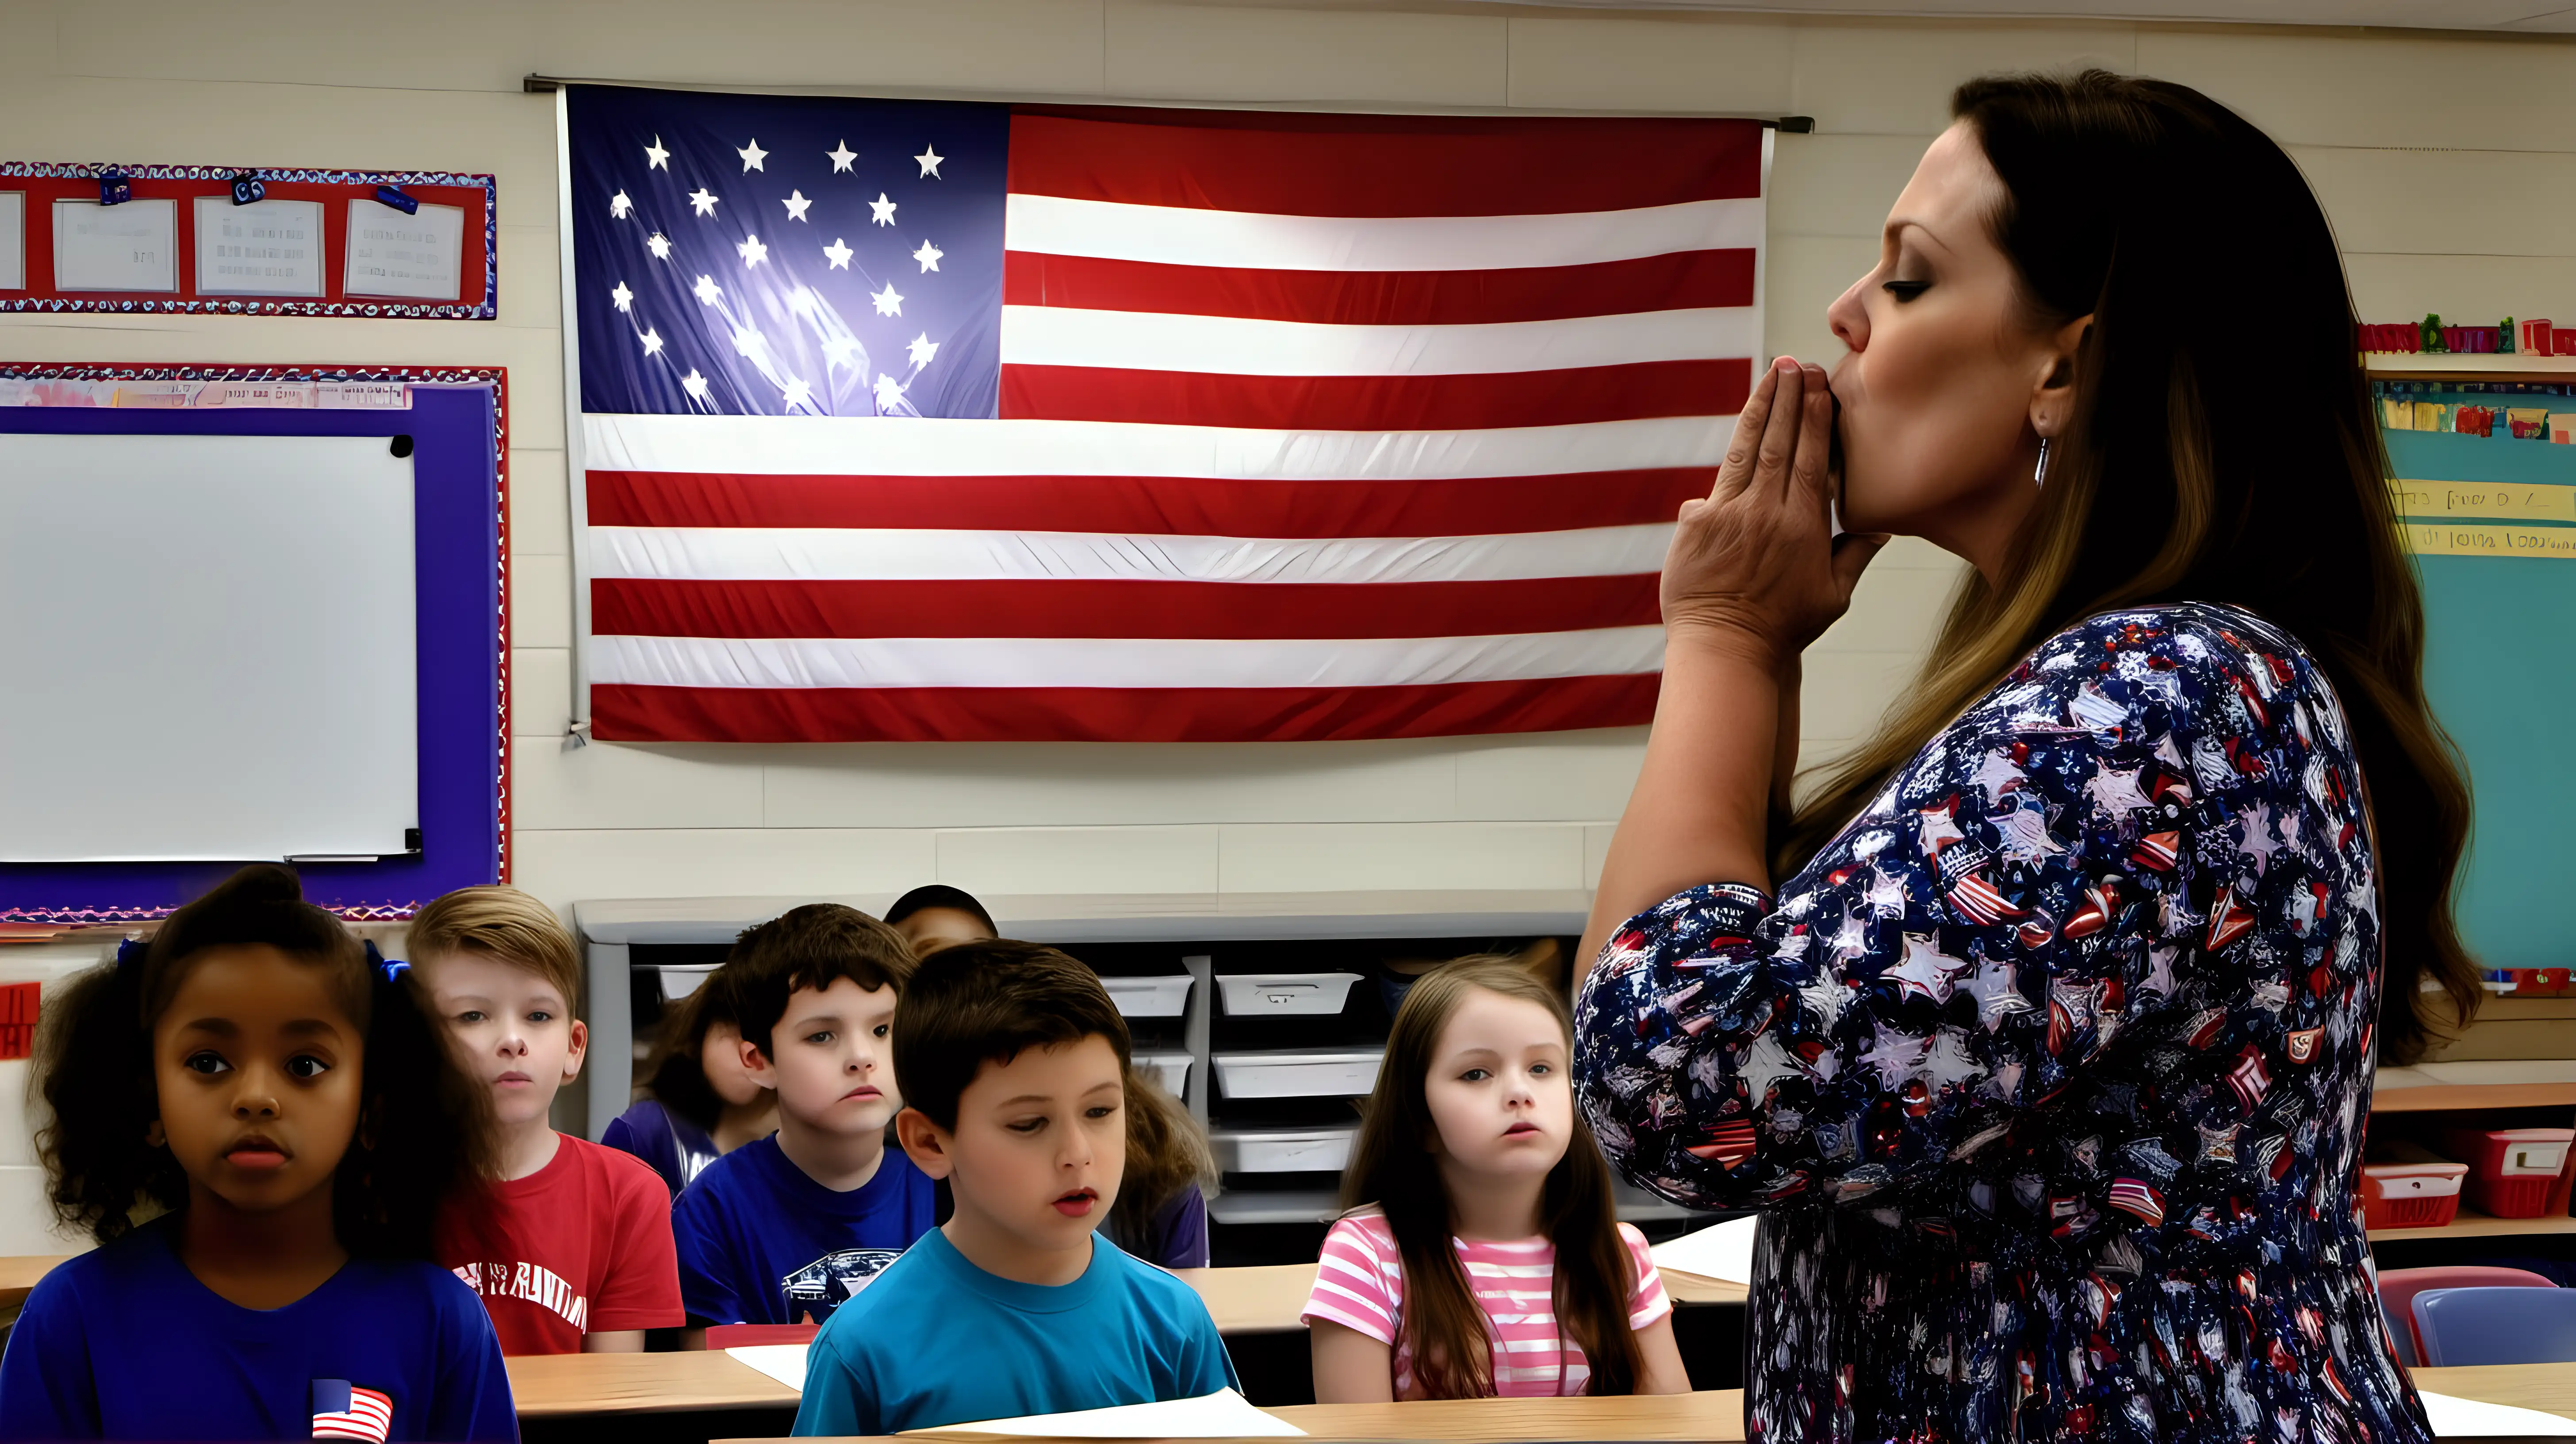 Teacher Leading Pledge of Allegiance with Patriotic Kiss